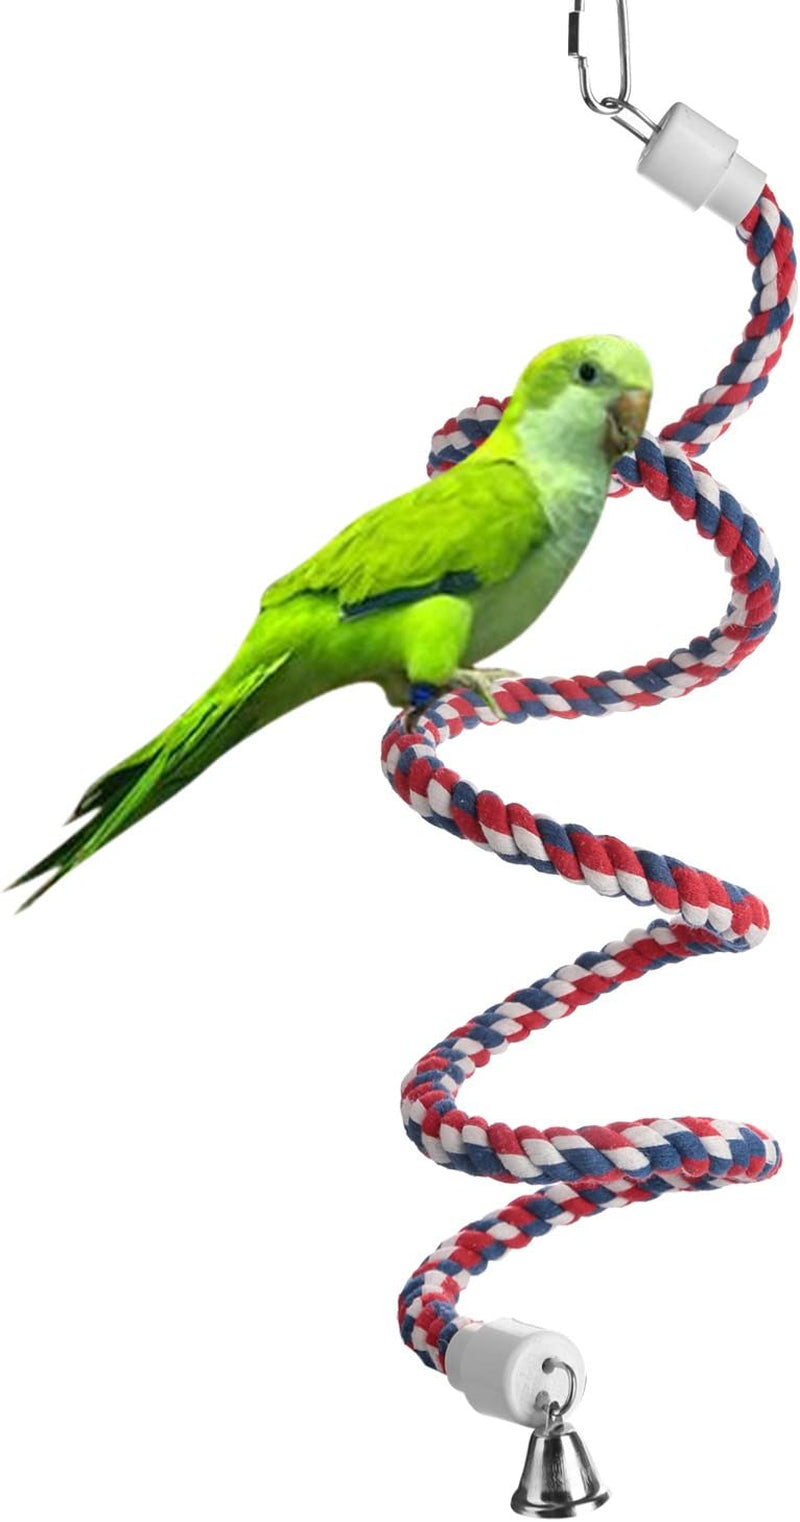 Aigou Bird Rope Perch,Spiral Cotton Parrot Swing Climbing Standing Bird Toys with Bell (Small - 52 Inch)